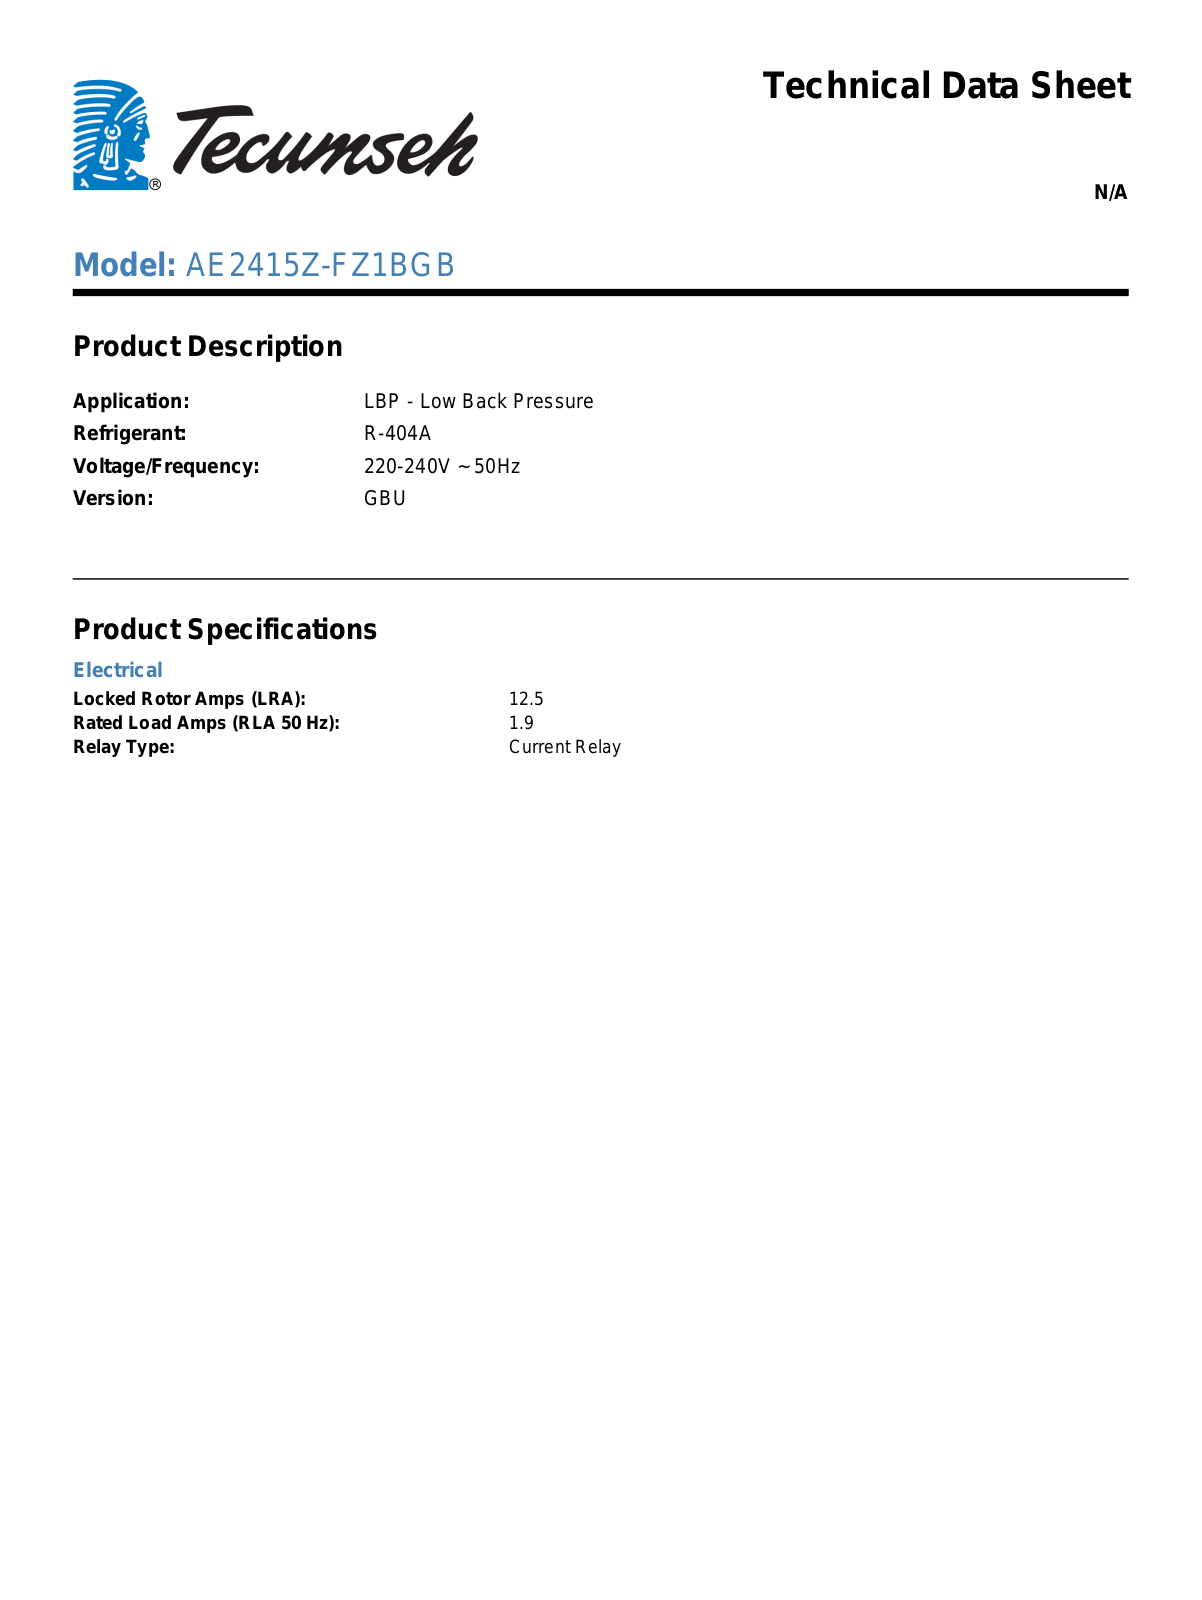 Tecumseh AE2415Z-FZ1BGB User Manual